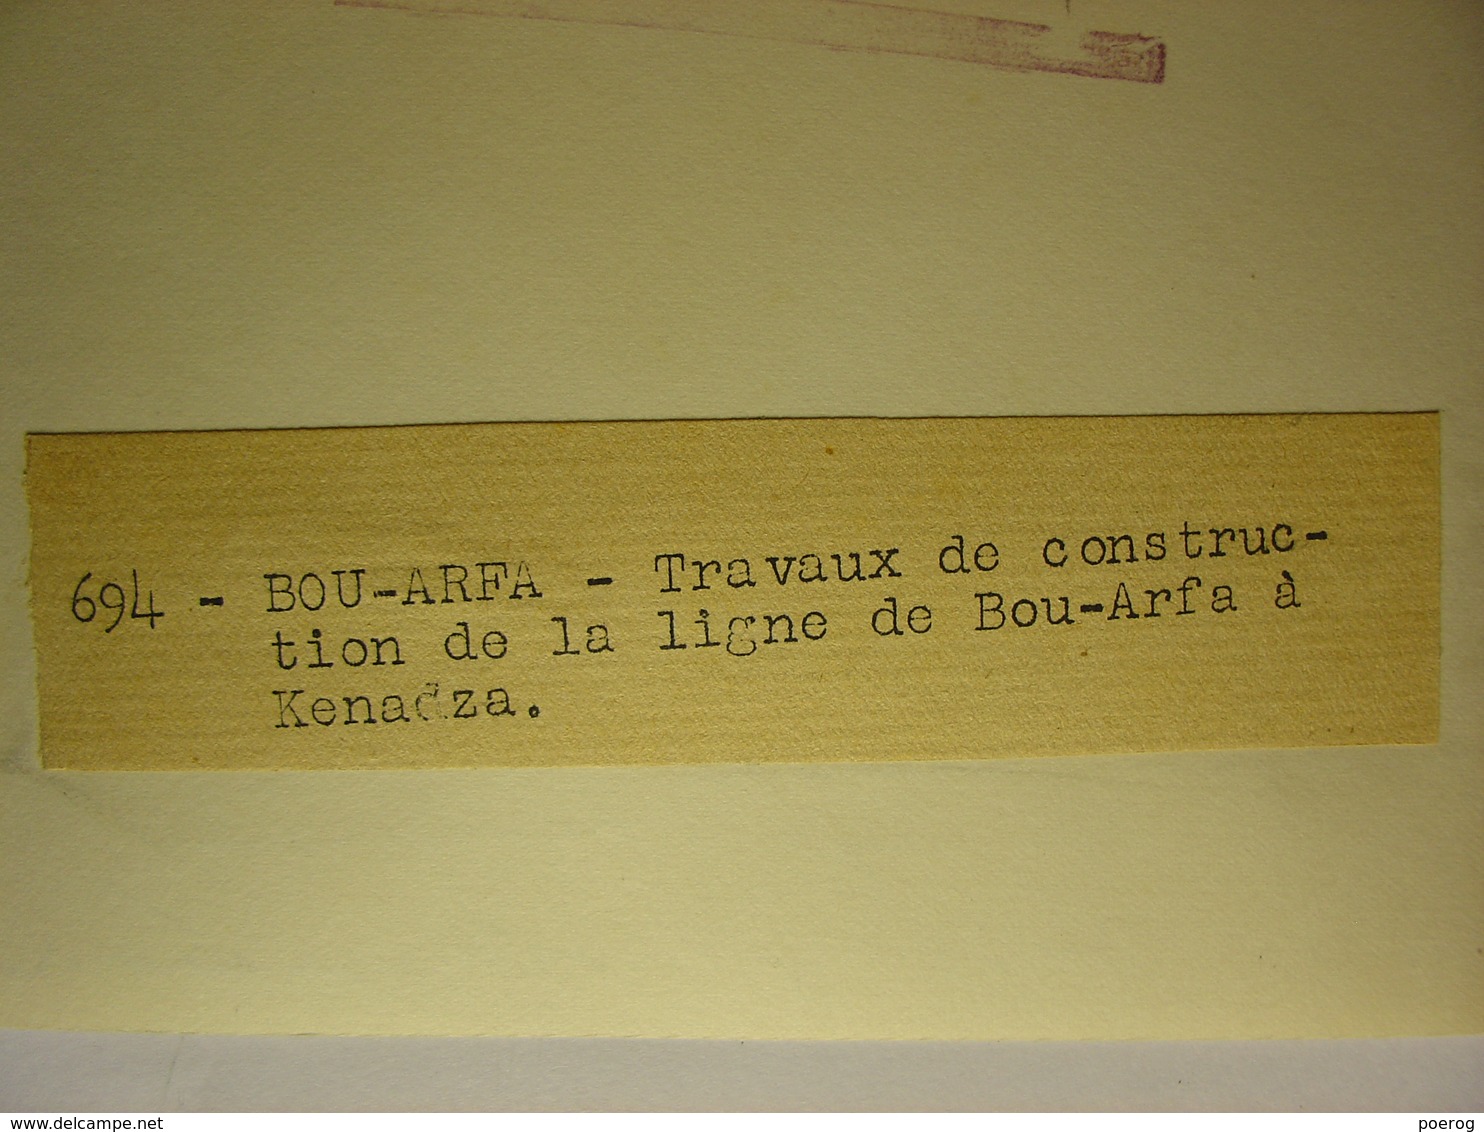 PHOTO CIRCA 1940 - MAROC ALGERIE BOU ARFA KENADZA TRAVAUX CONSTRUCTION DE LA LIGNE DE TRAIN - Bouarfa Kenadsa - SAHARA - Trains